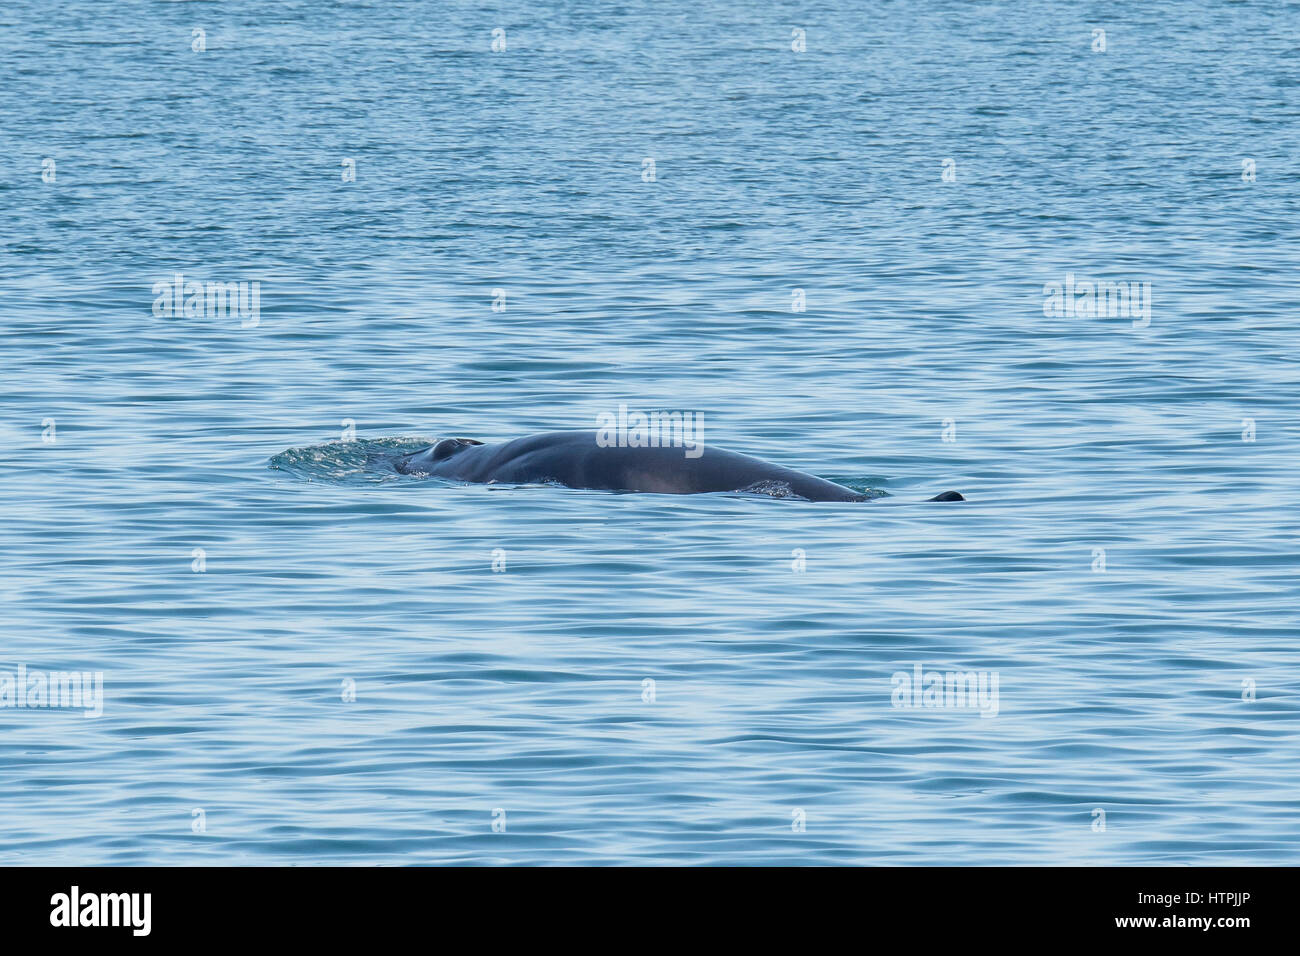 Common minke whale or northern minke whale, Balaenoptera acutorostrata, surfacing with blowhole visible, Reykjavik, Iceland Stock Photo